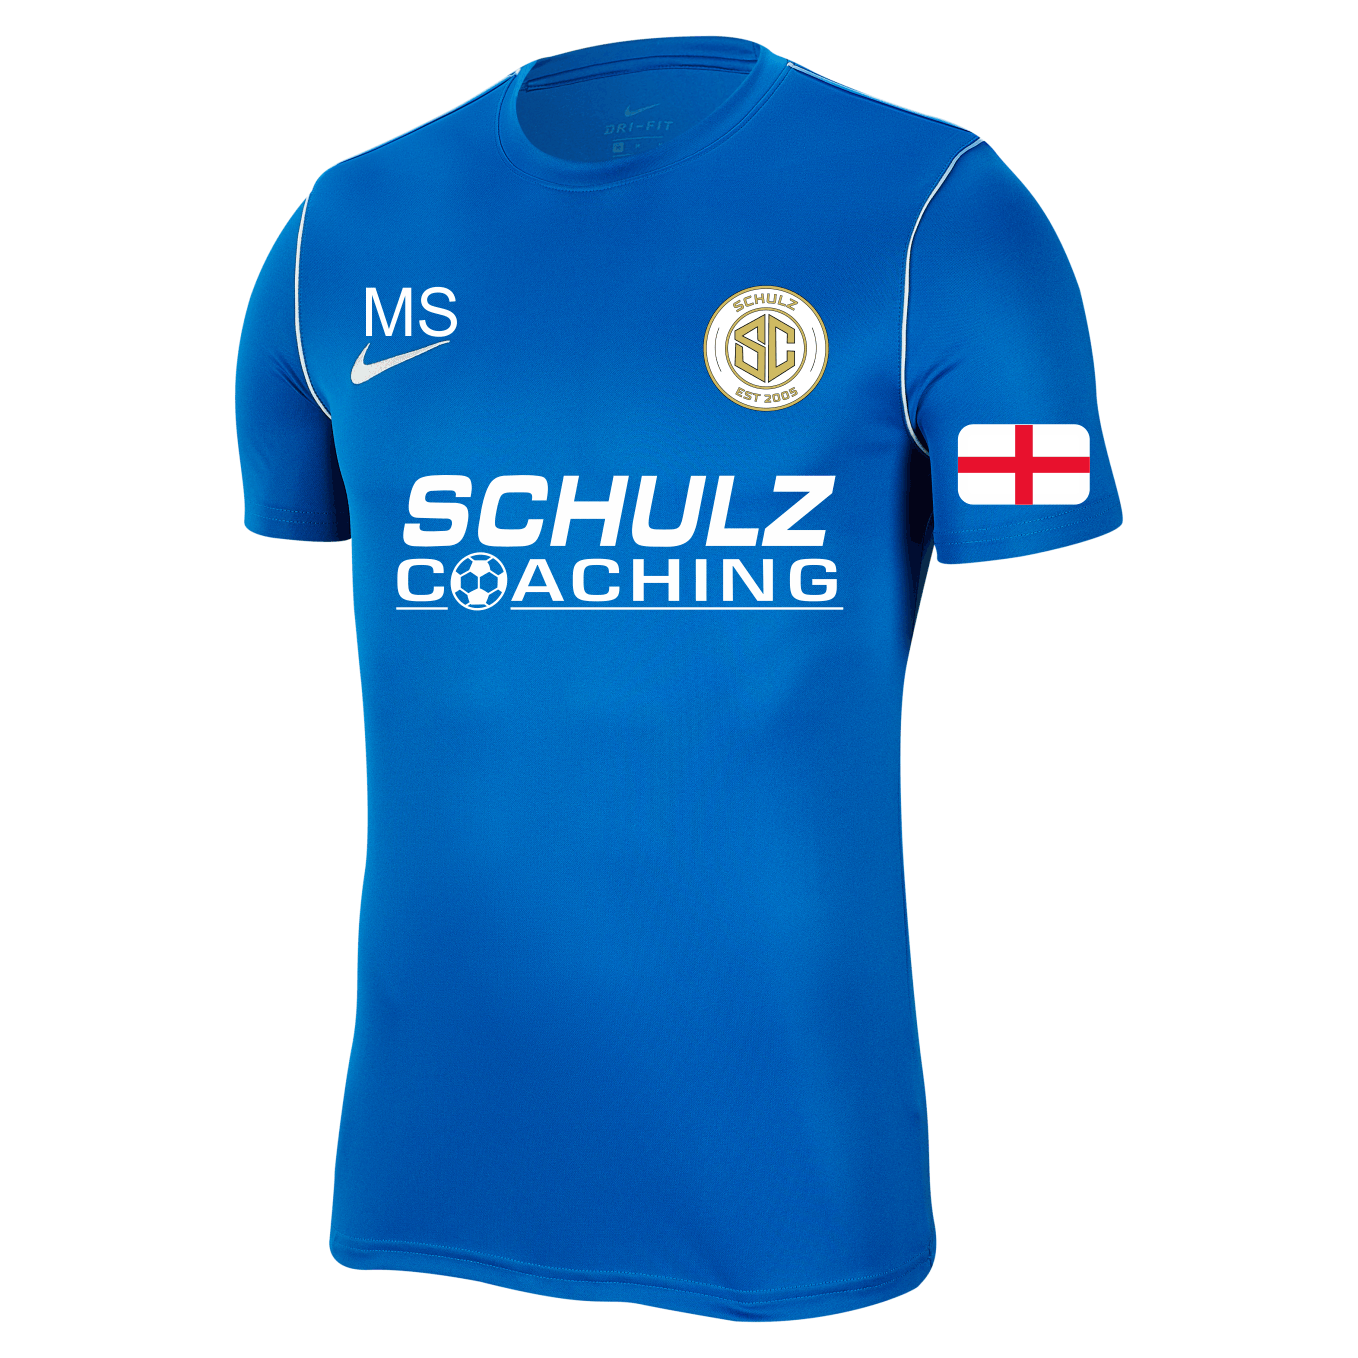 Schulz Coaching - Coaches Tracksuit